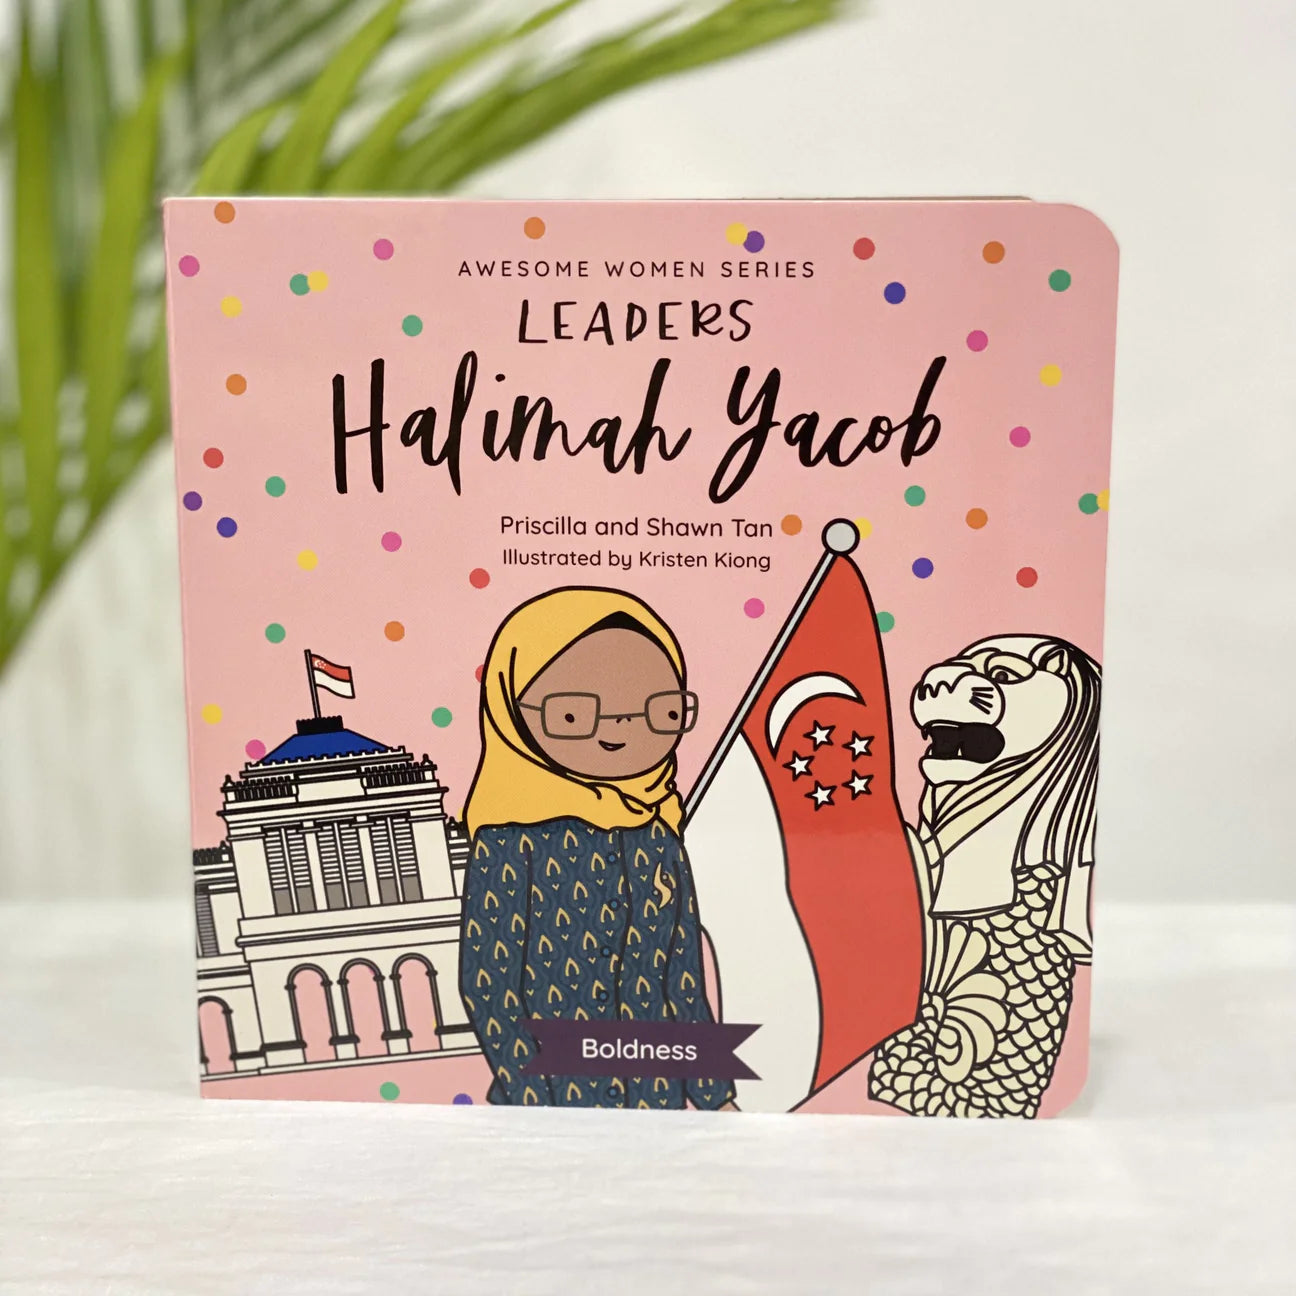 Awesome Women Series Leaders | Halimah Yacob